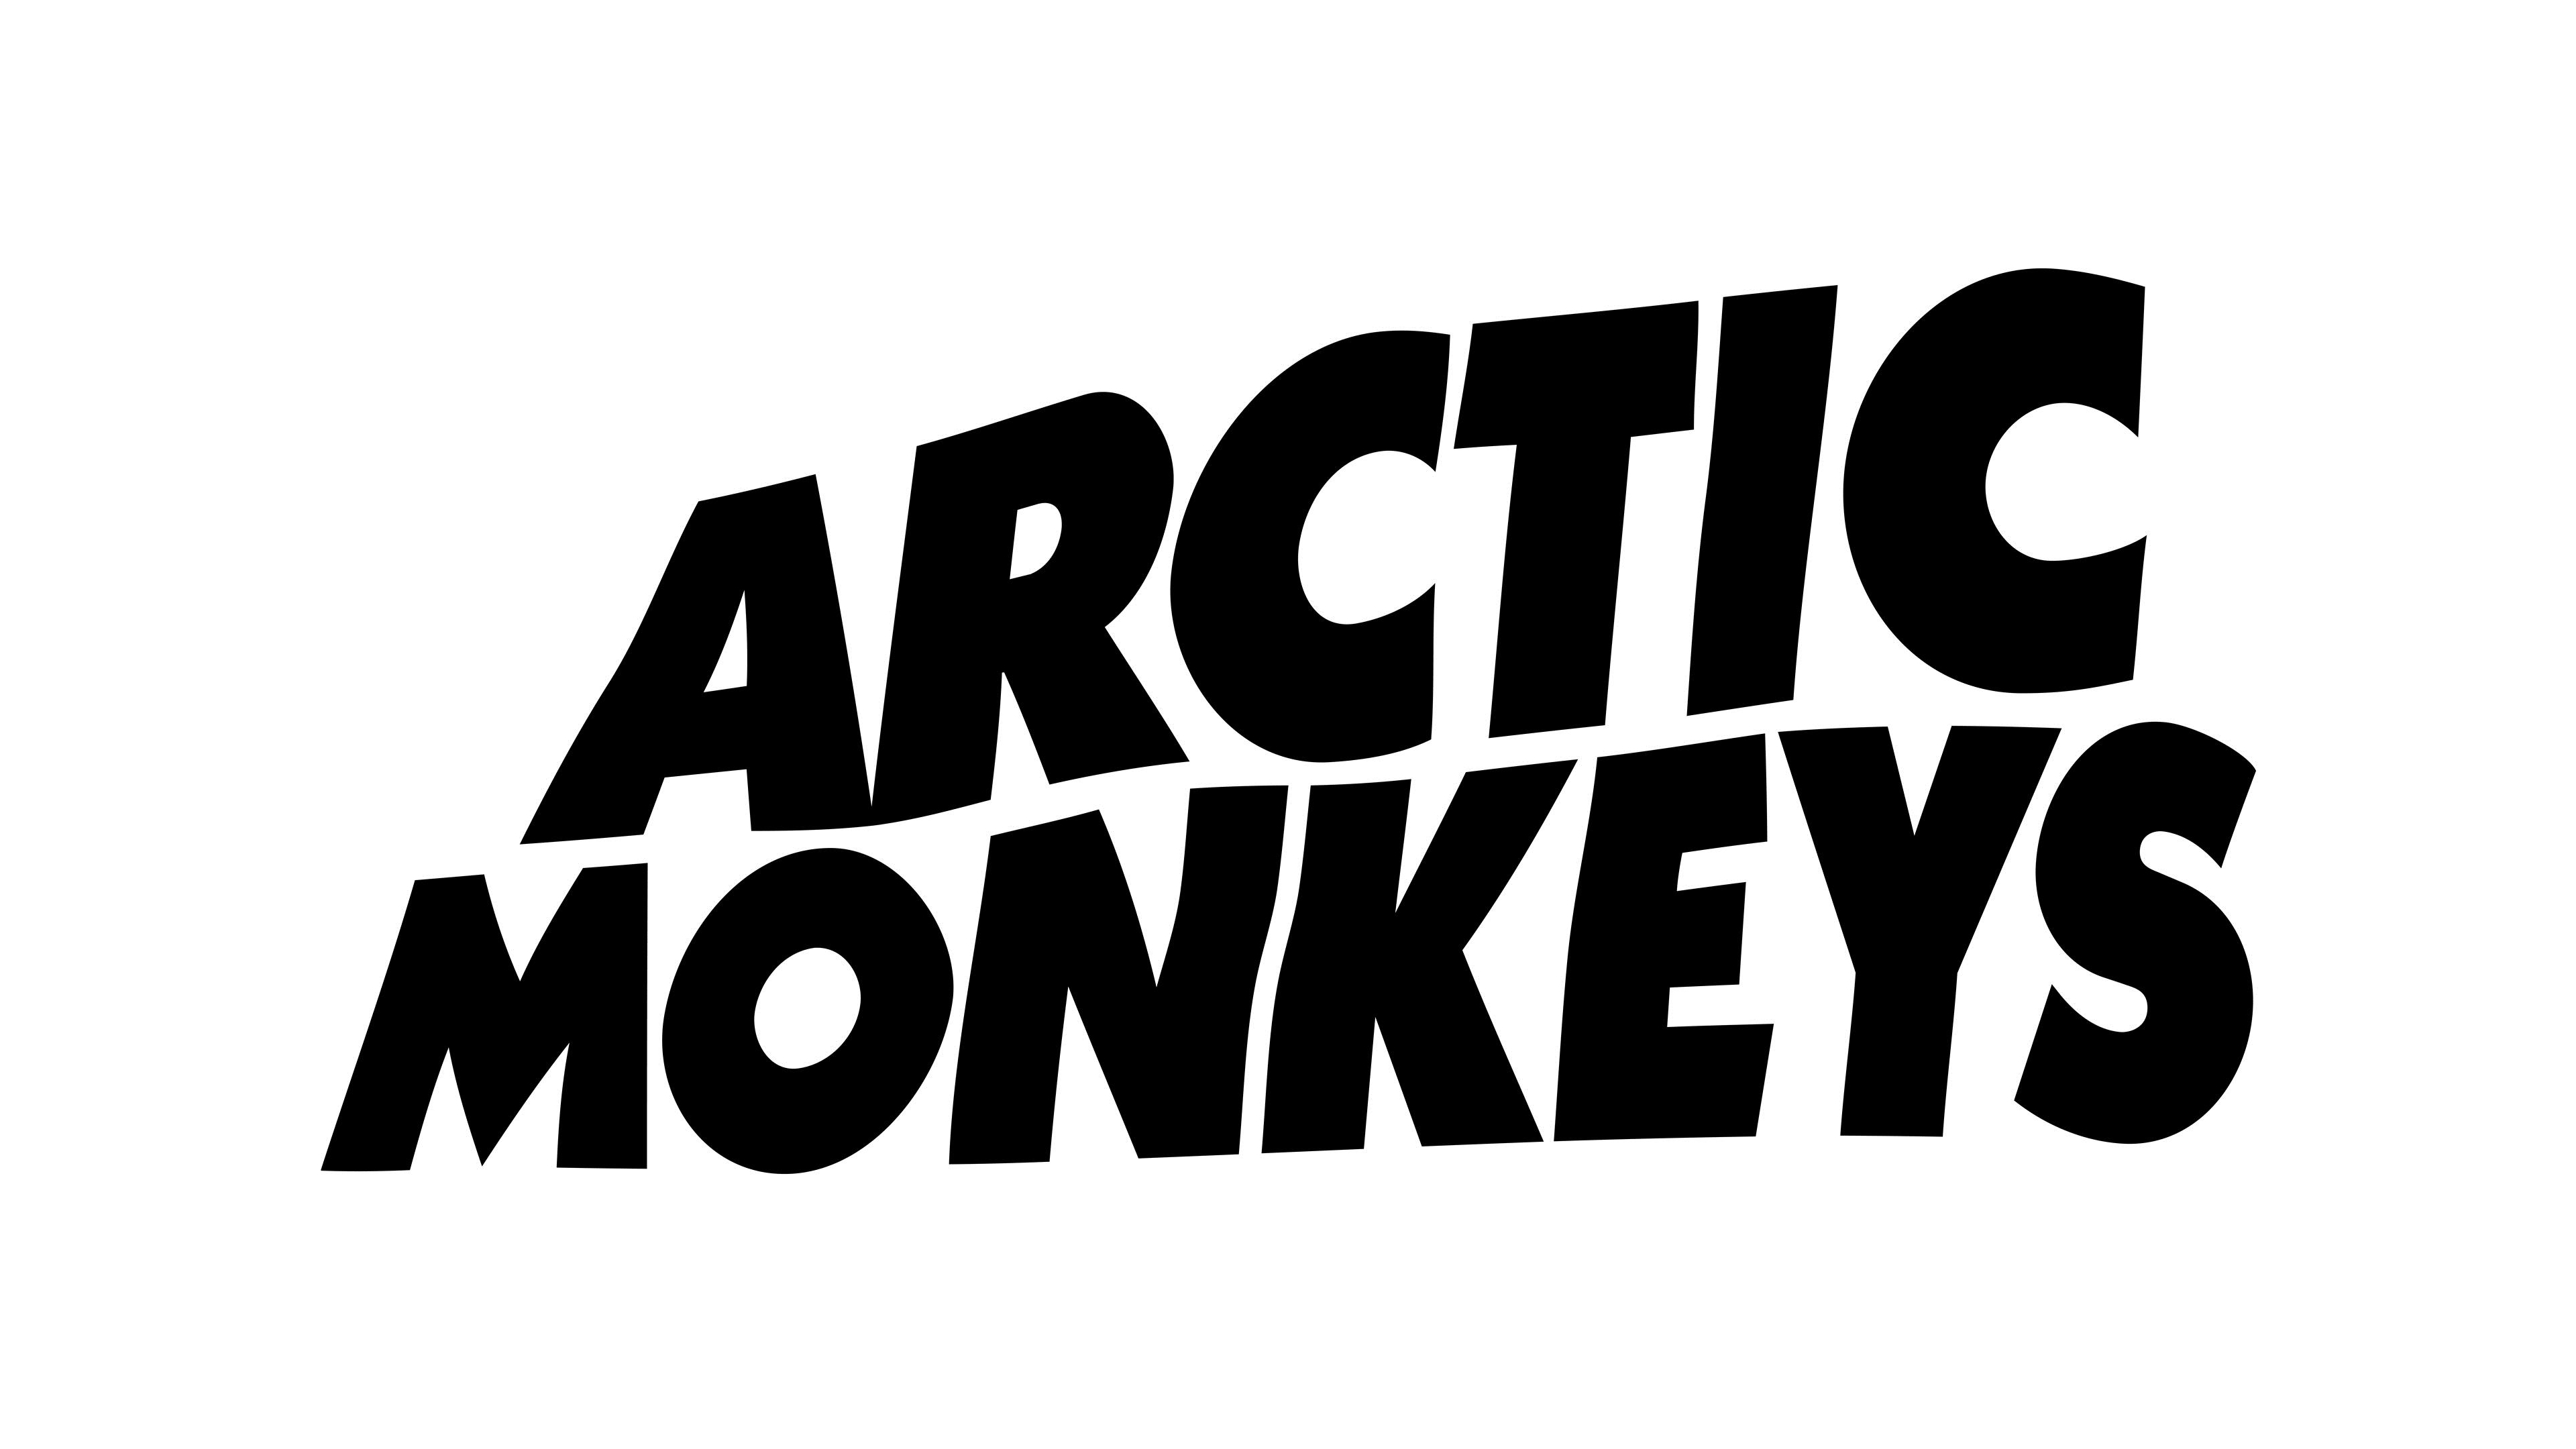 fondos de pantalla de monos árticos hd,fuente,texto,gráficos